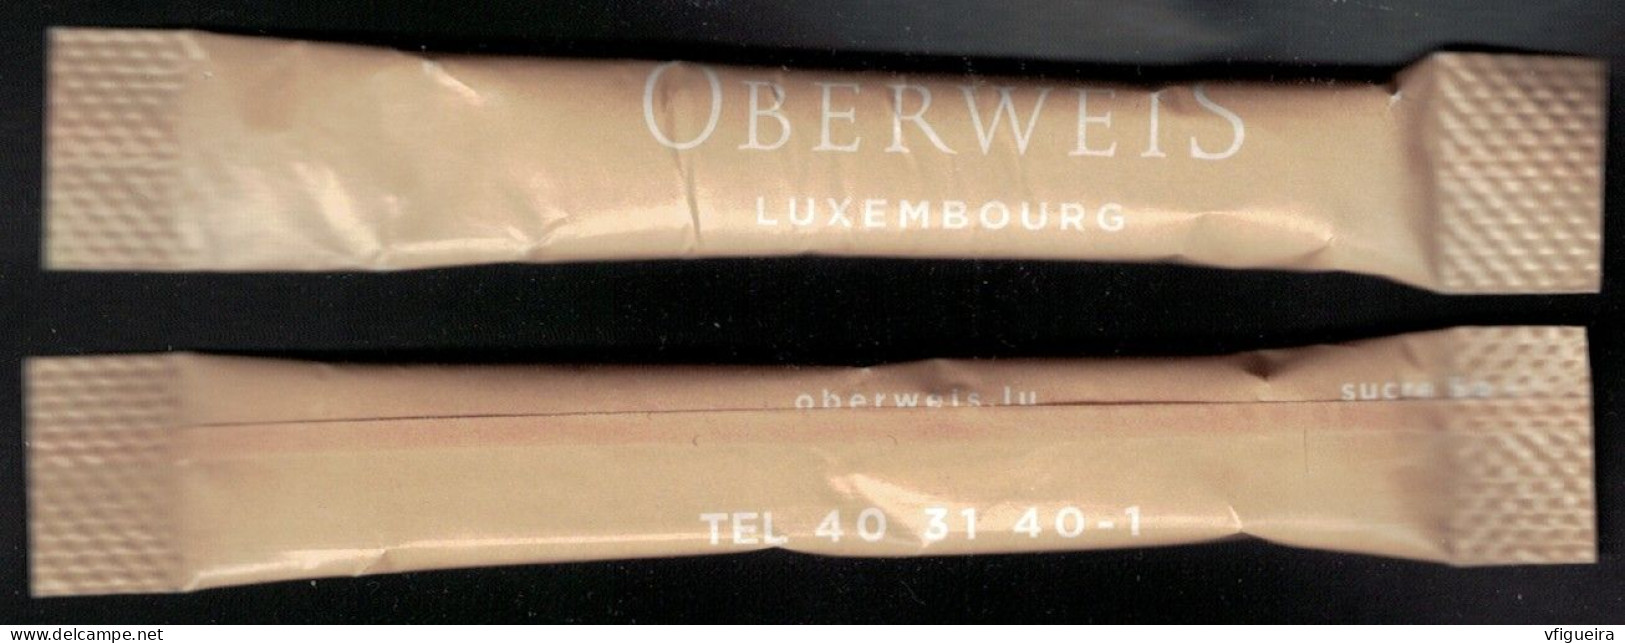 Luxembourg Sachet Sucre Sugar Bag Bûchette Oberweis Luxembourg - Sugars